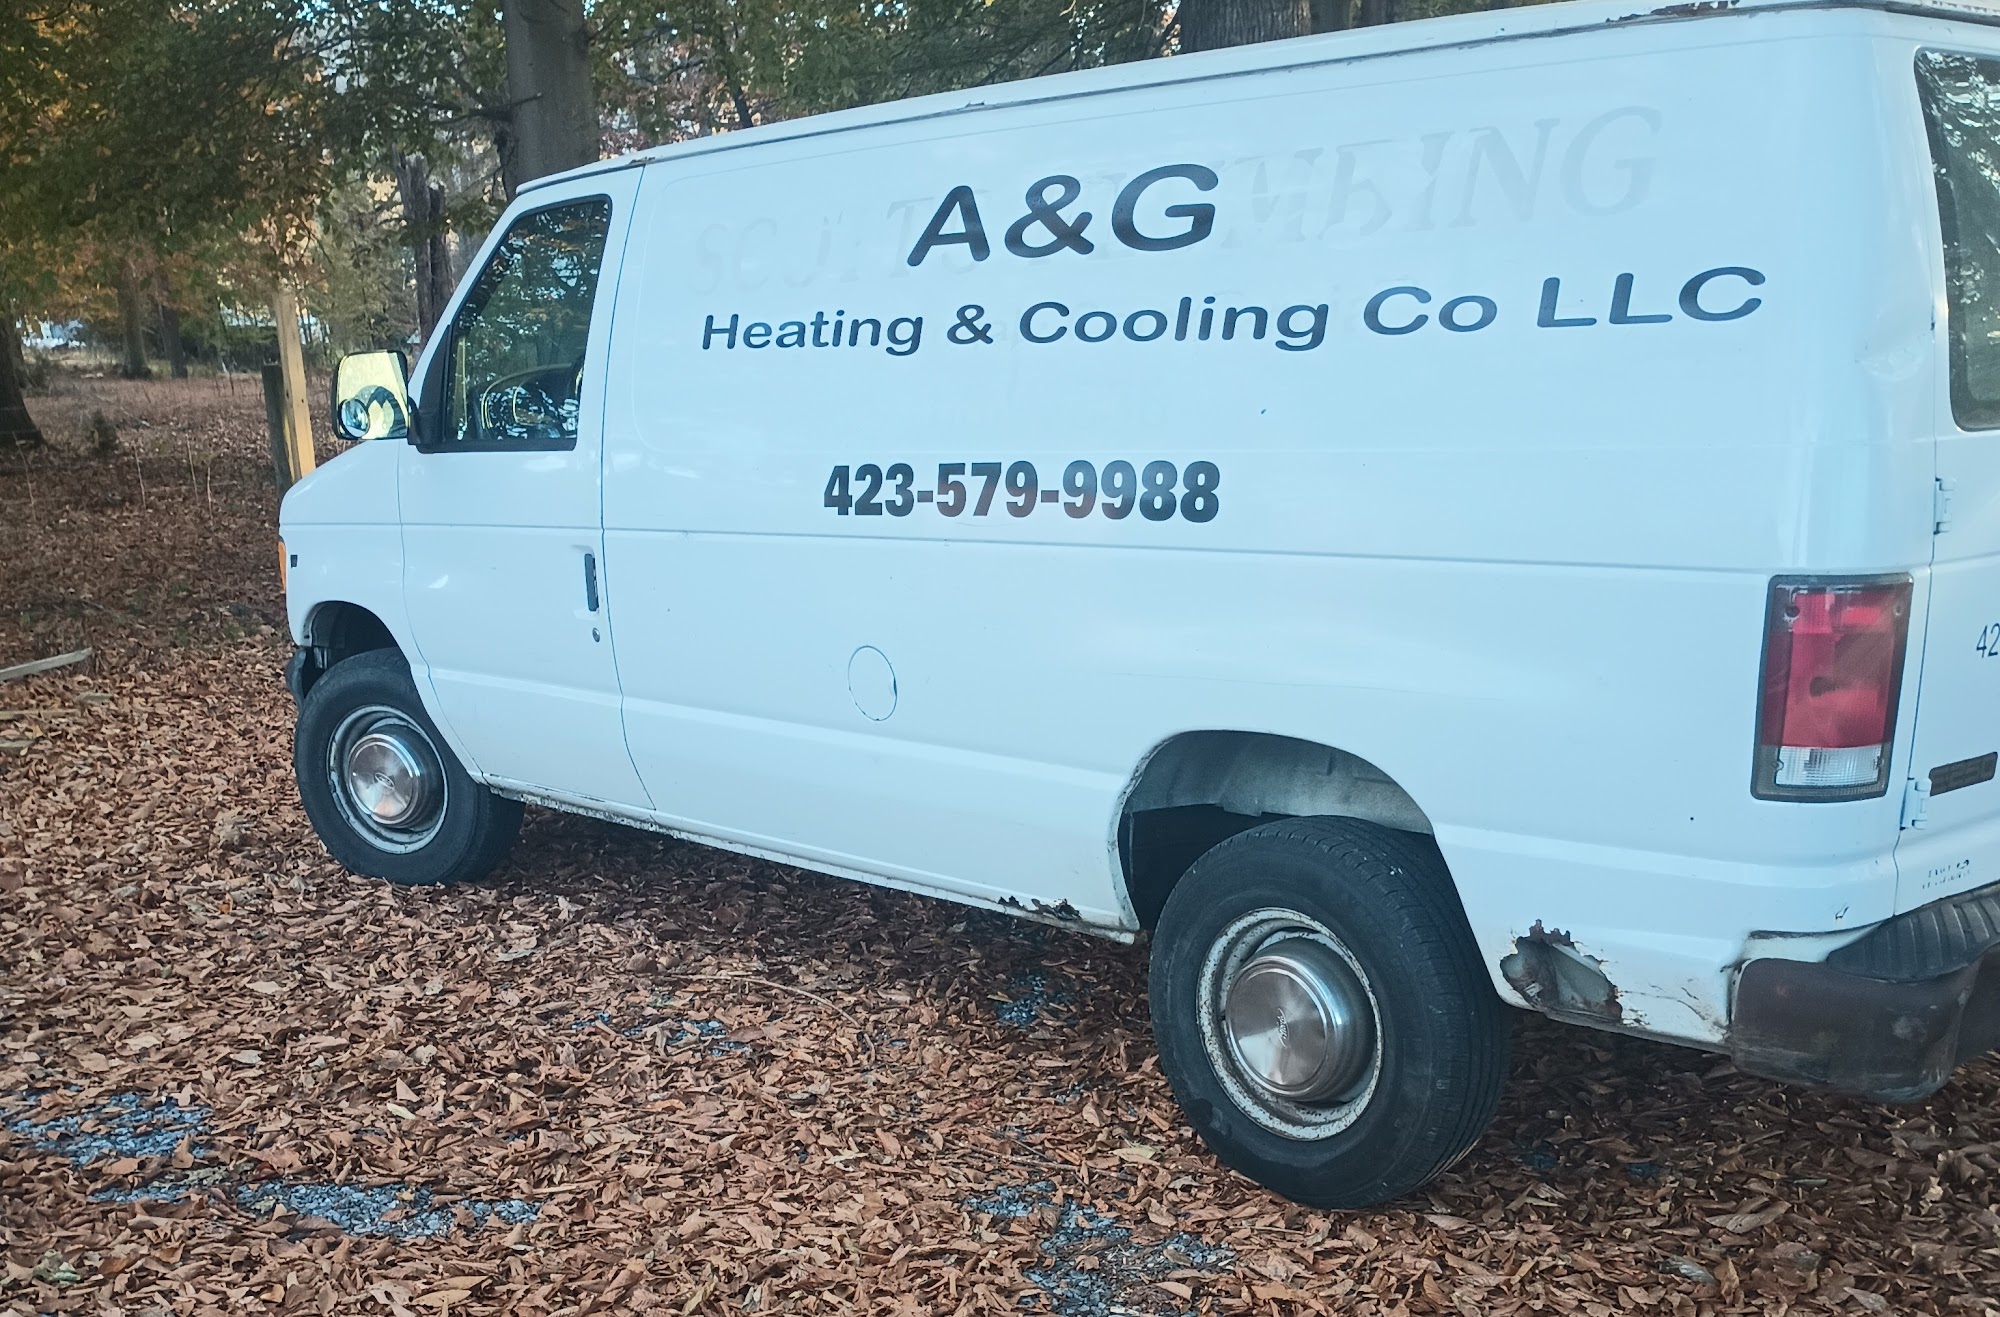 A&G Heating & Cooling Co LLC